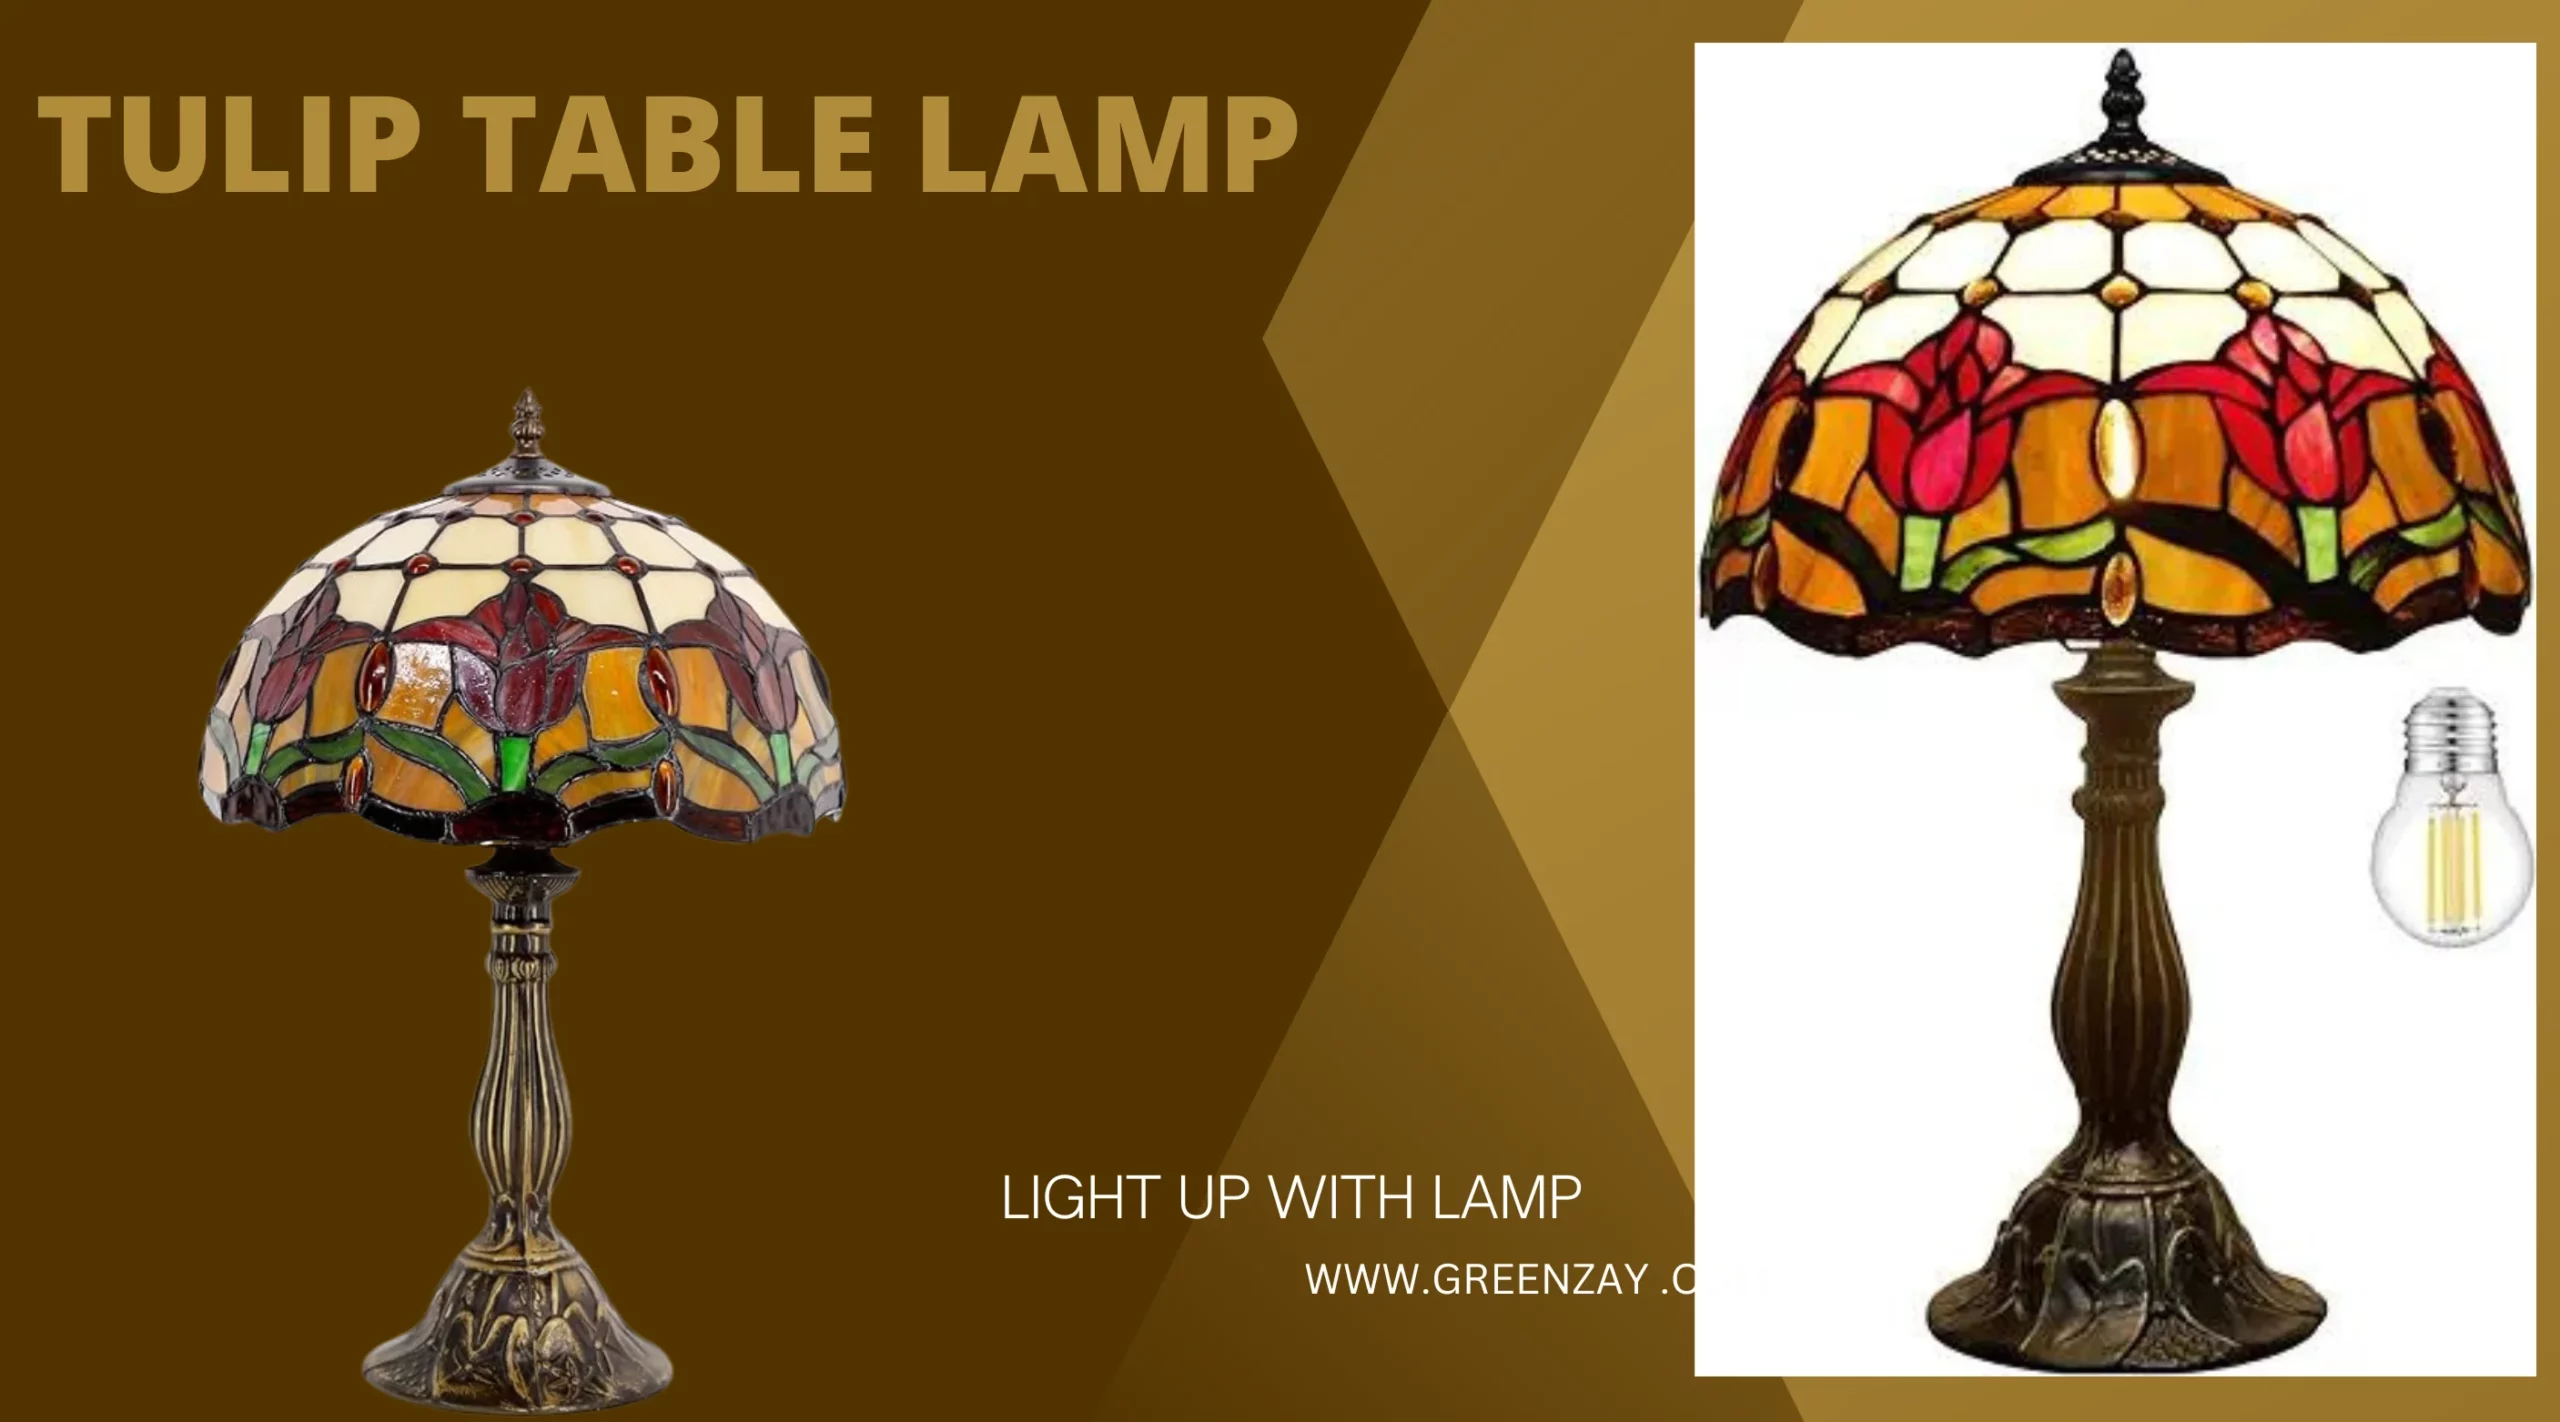 Tulip table Lamp